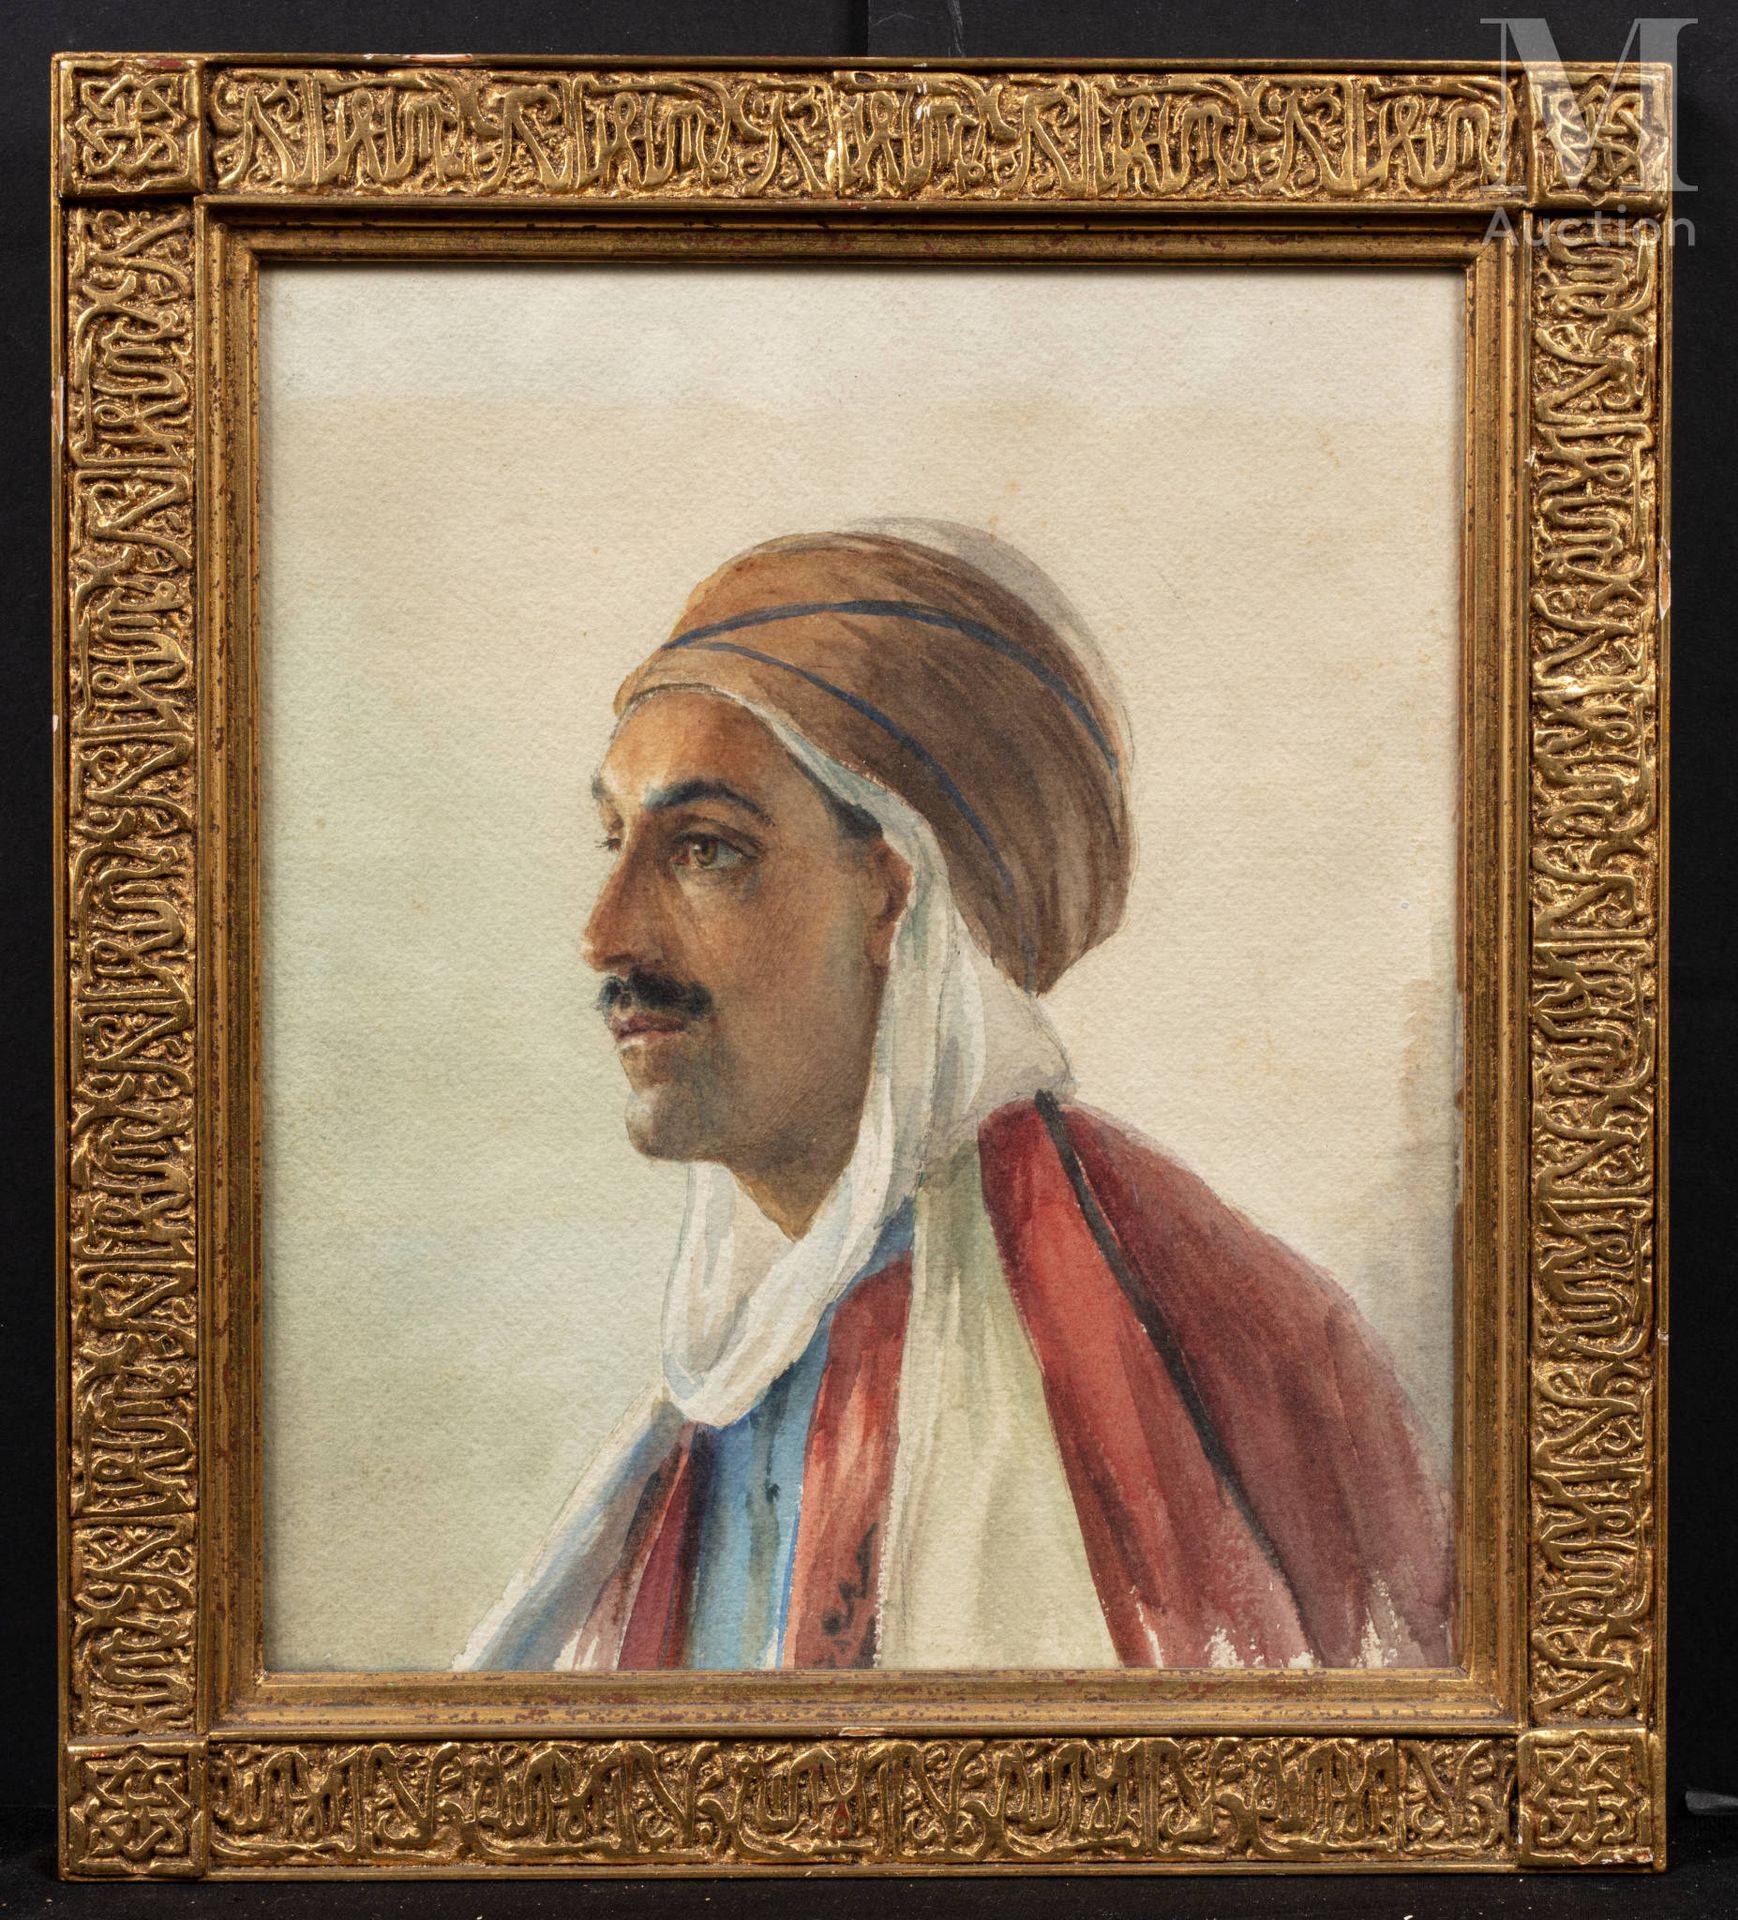 D'ANGLADE (1854 -1919) 戴头巾的人的肖像

水彩画

32 x 27 cm

无符号

东方框架